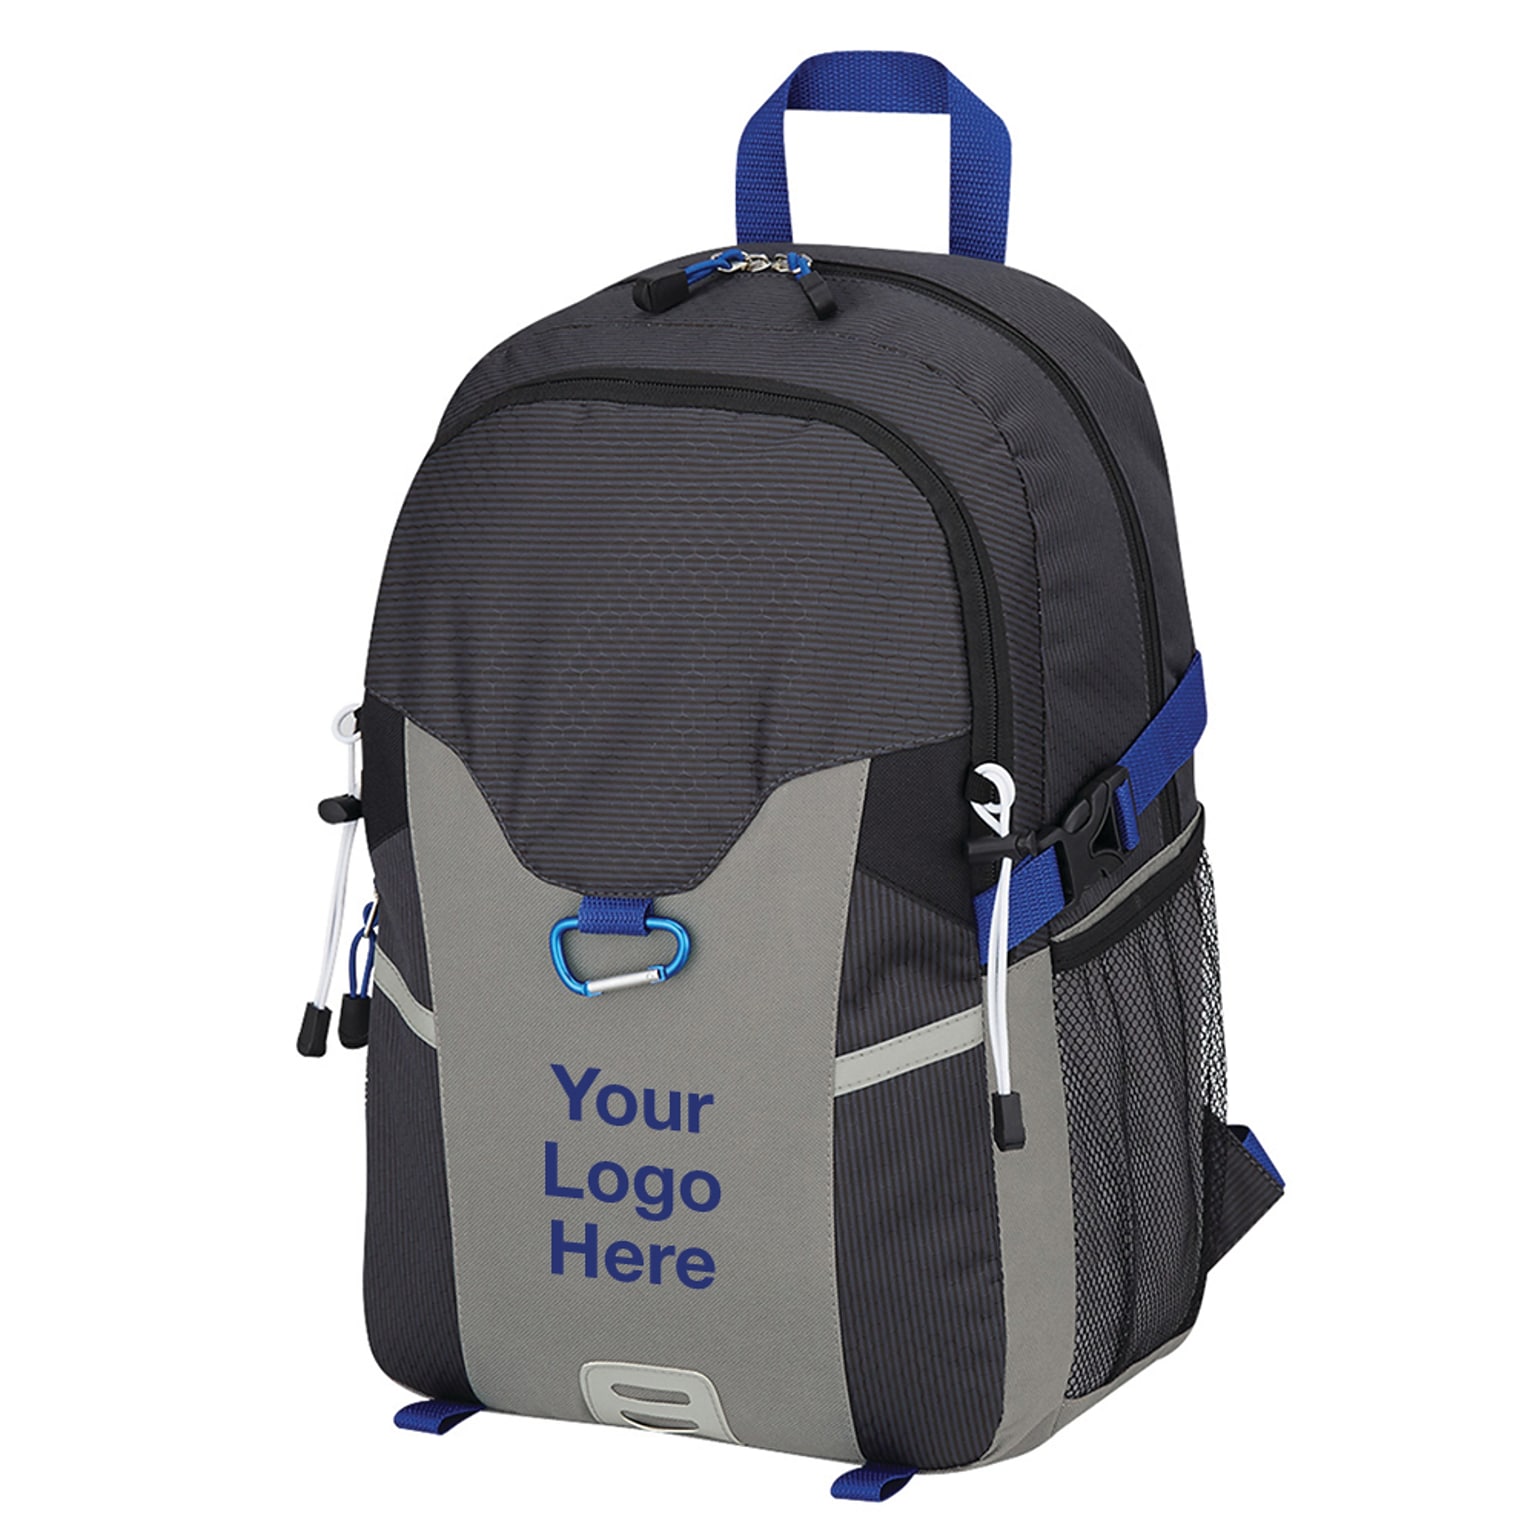 Custom Odyssey Backpack; 17x11-1/2, (QL47660)